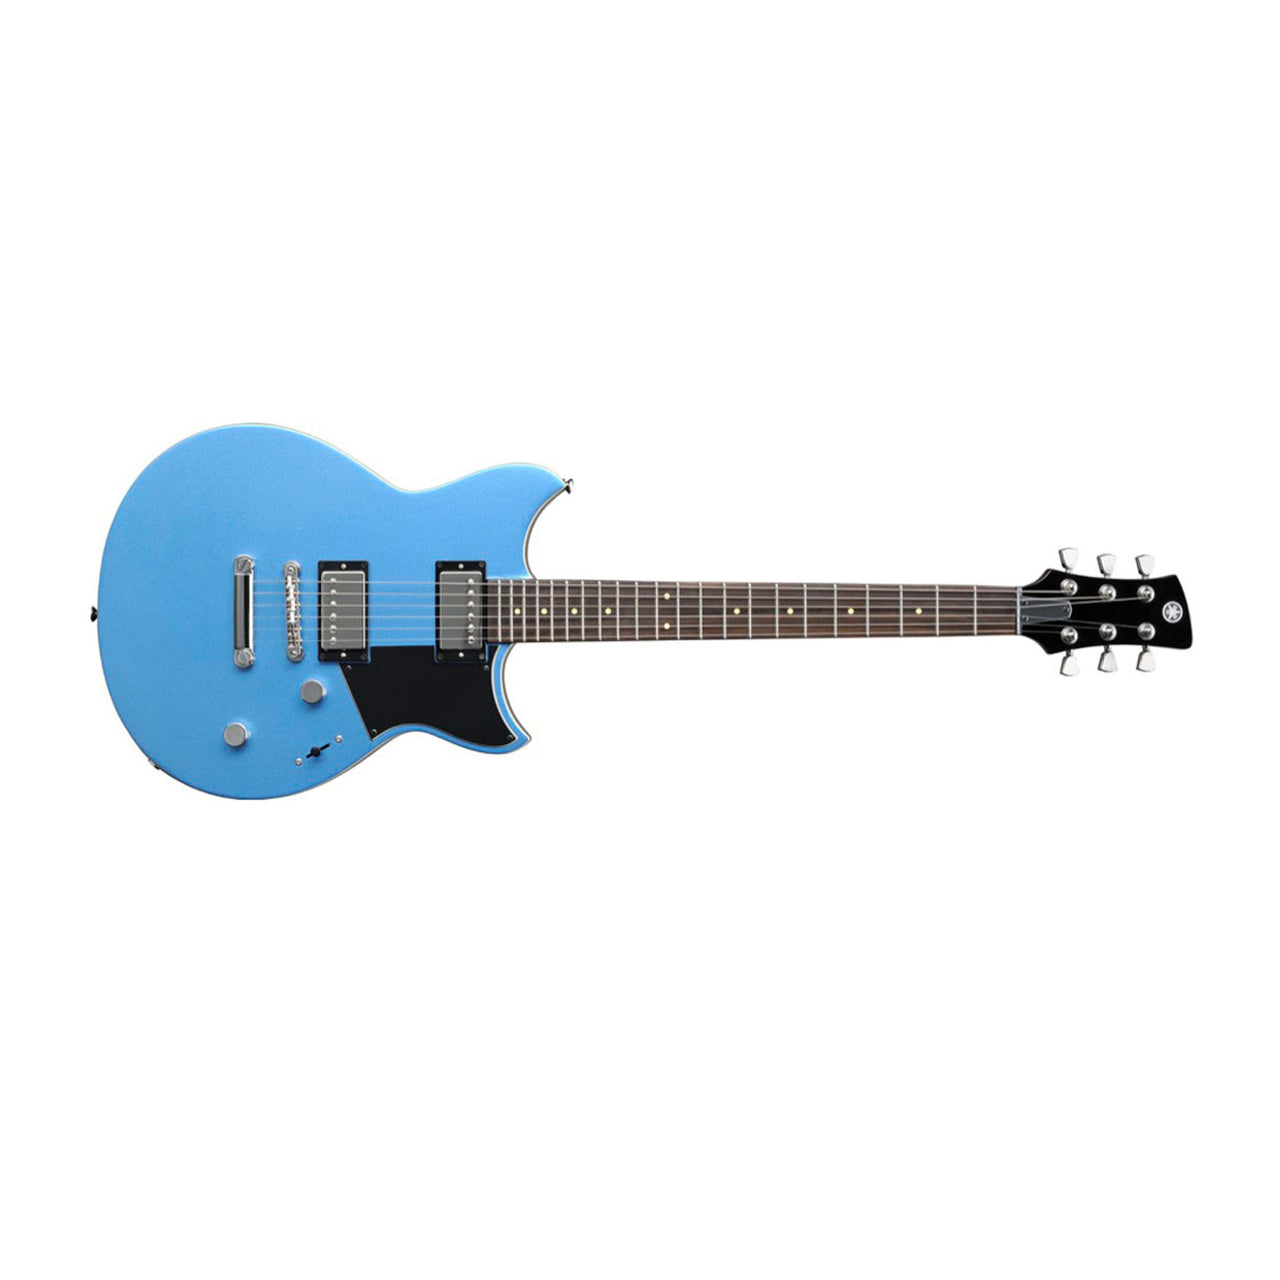 Guitarra Electrica Yamaha Revstar Factory Blue Rs420fblue